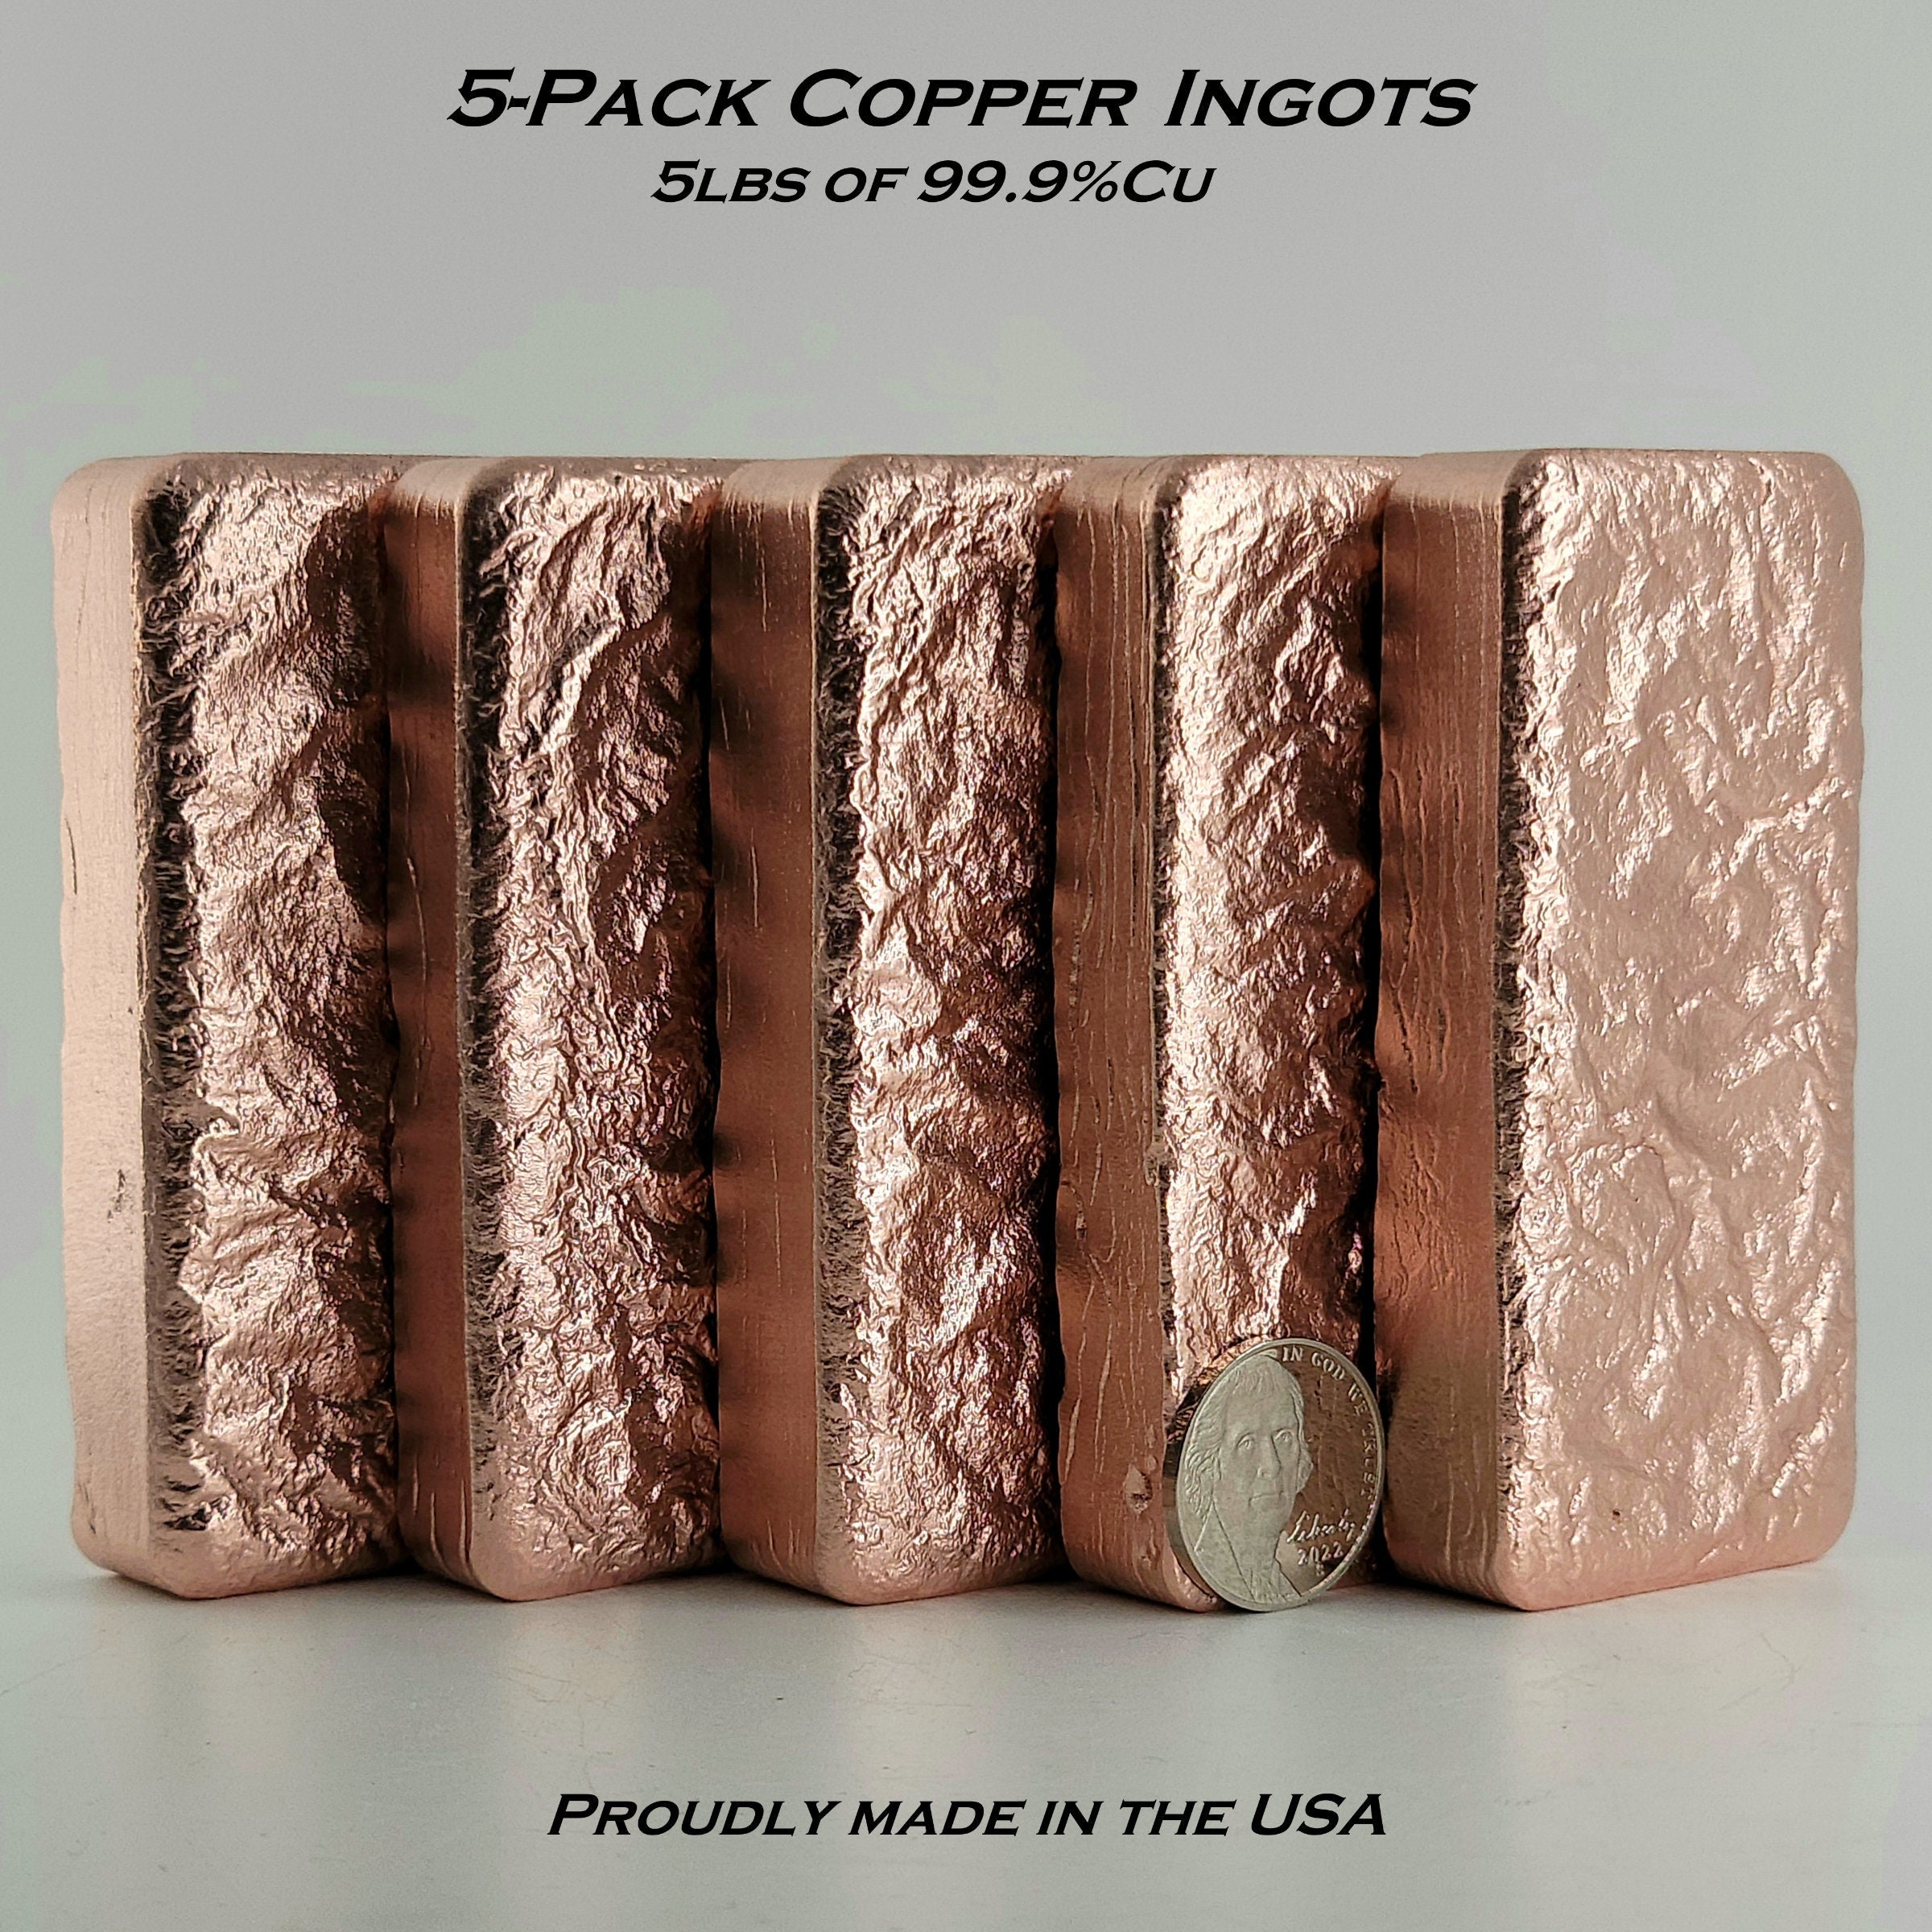 5-Pack Large Copper Ingots - 99.9% Cu - 25lb Min. Weight - XRF Verified